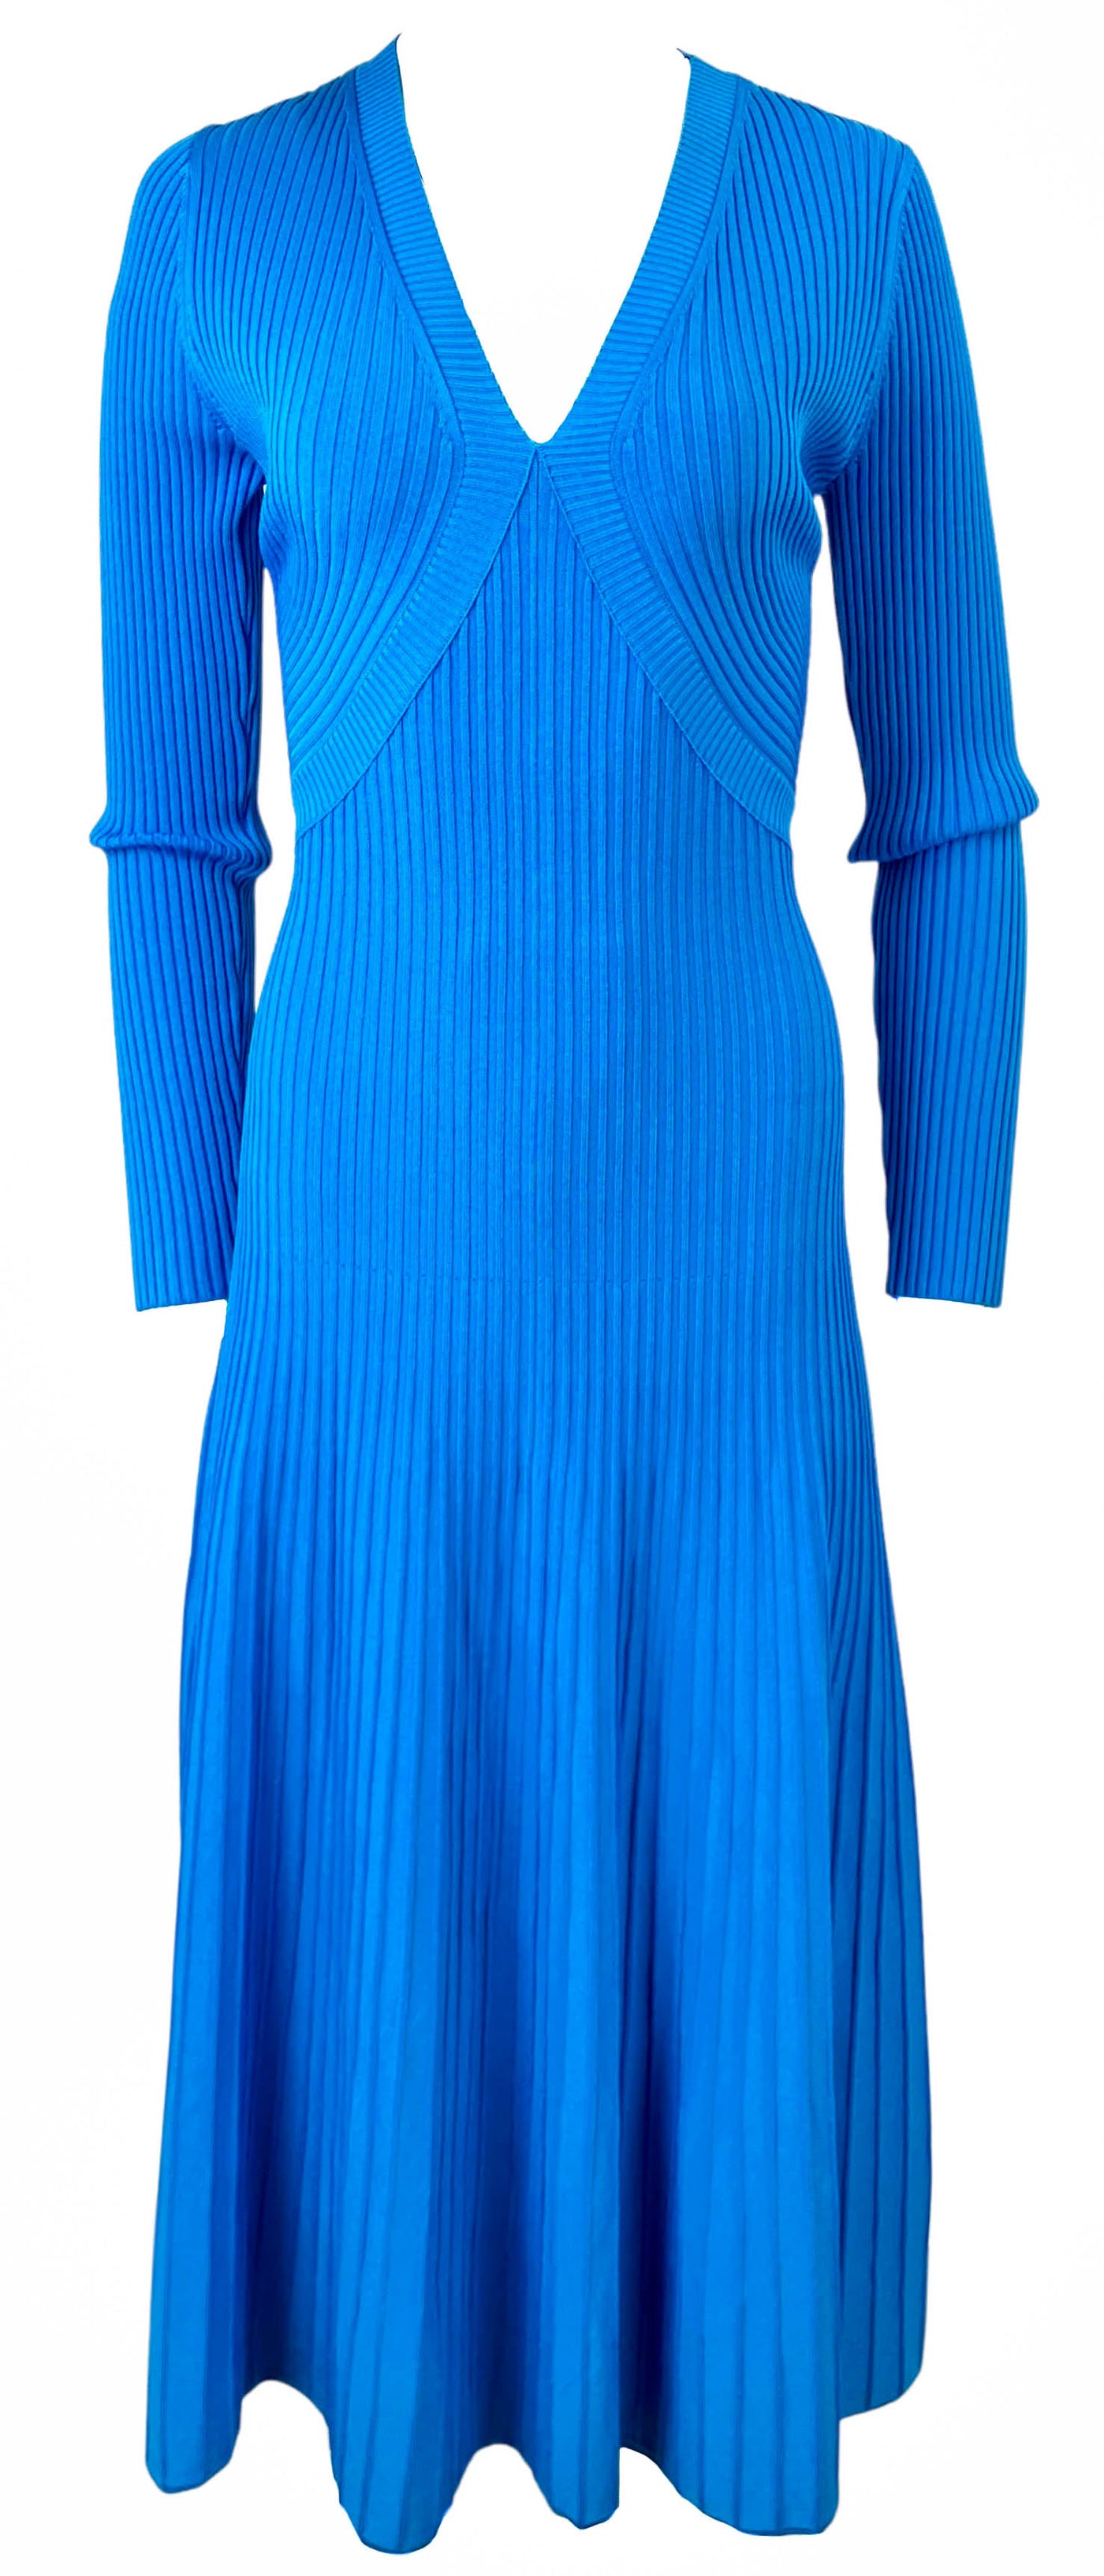 Jonathan Simkhai Melba Ribbed Long Sleeve Midi Dress in Caicos - Discounts on Jonathan Simkhai at UAL